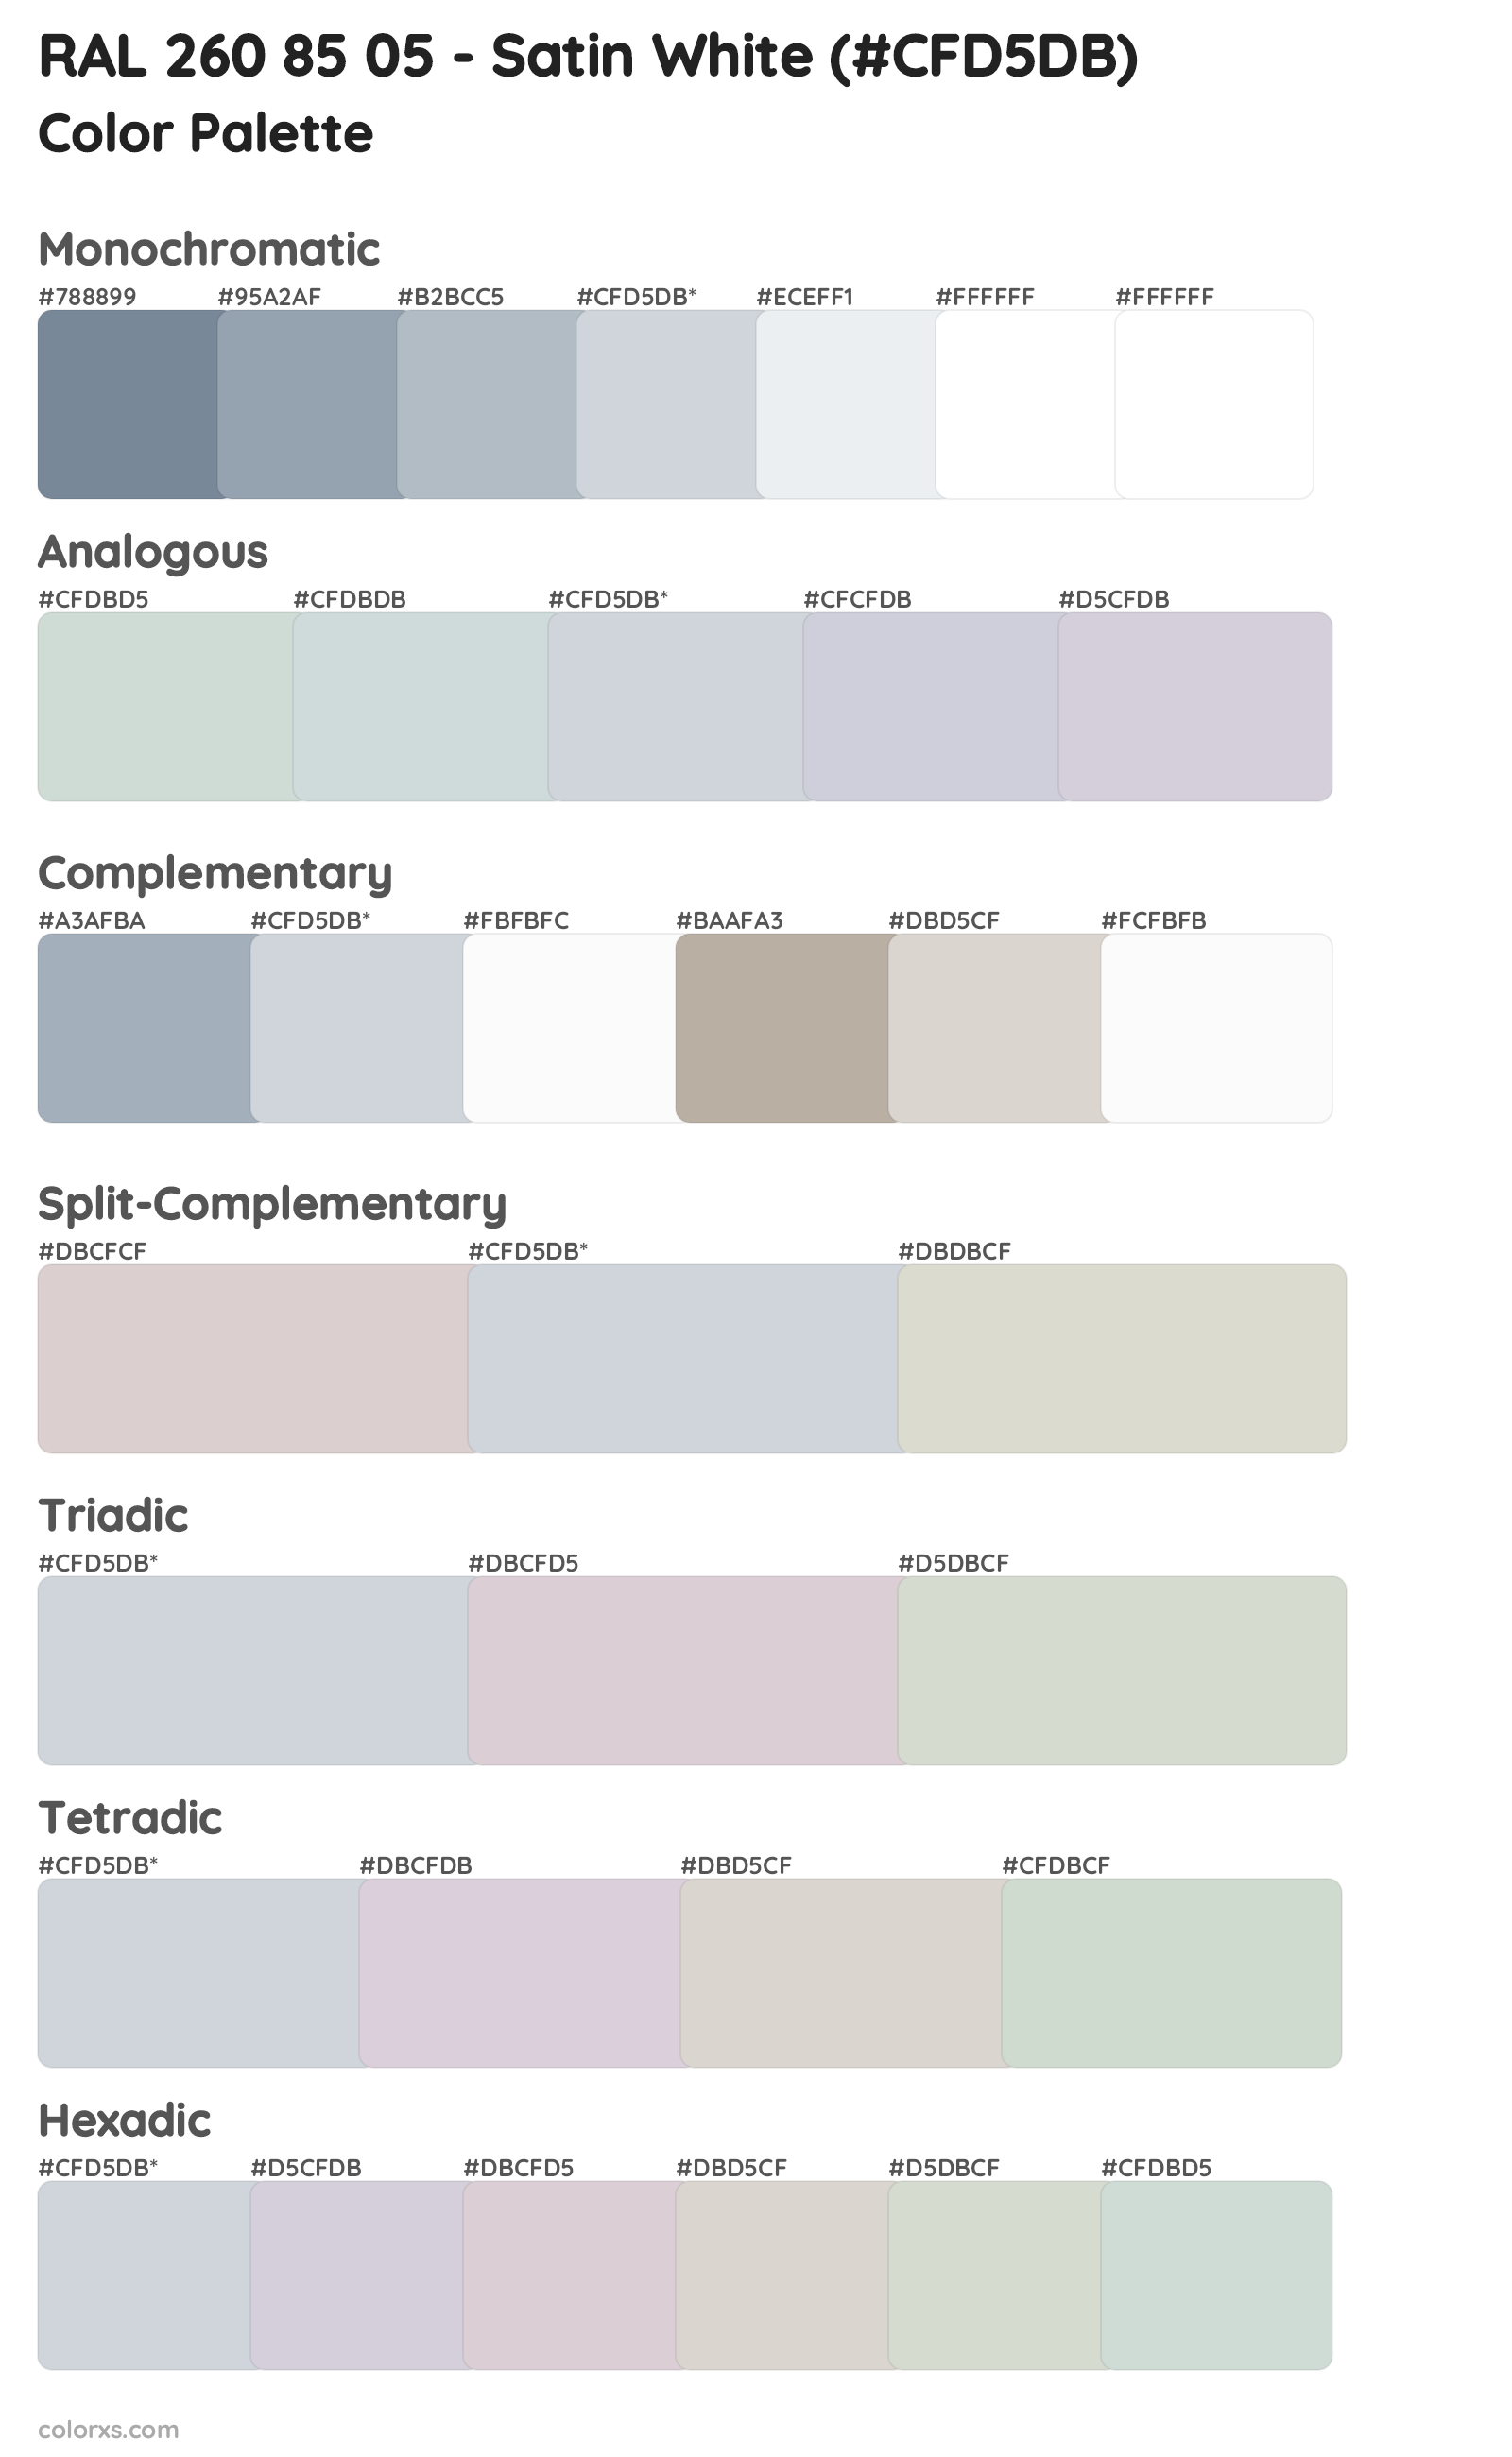 RAL 260 85 05 - Satin White Color Scheme Palettes